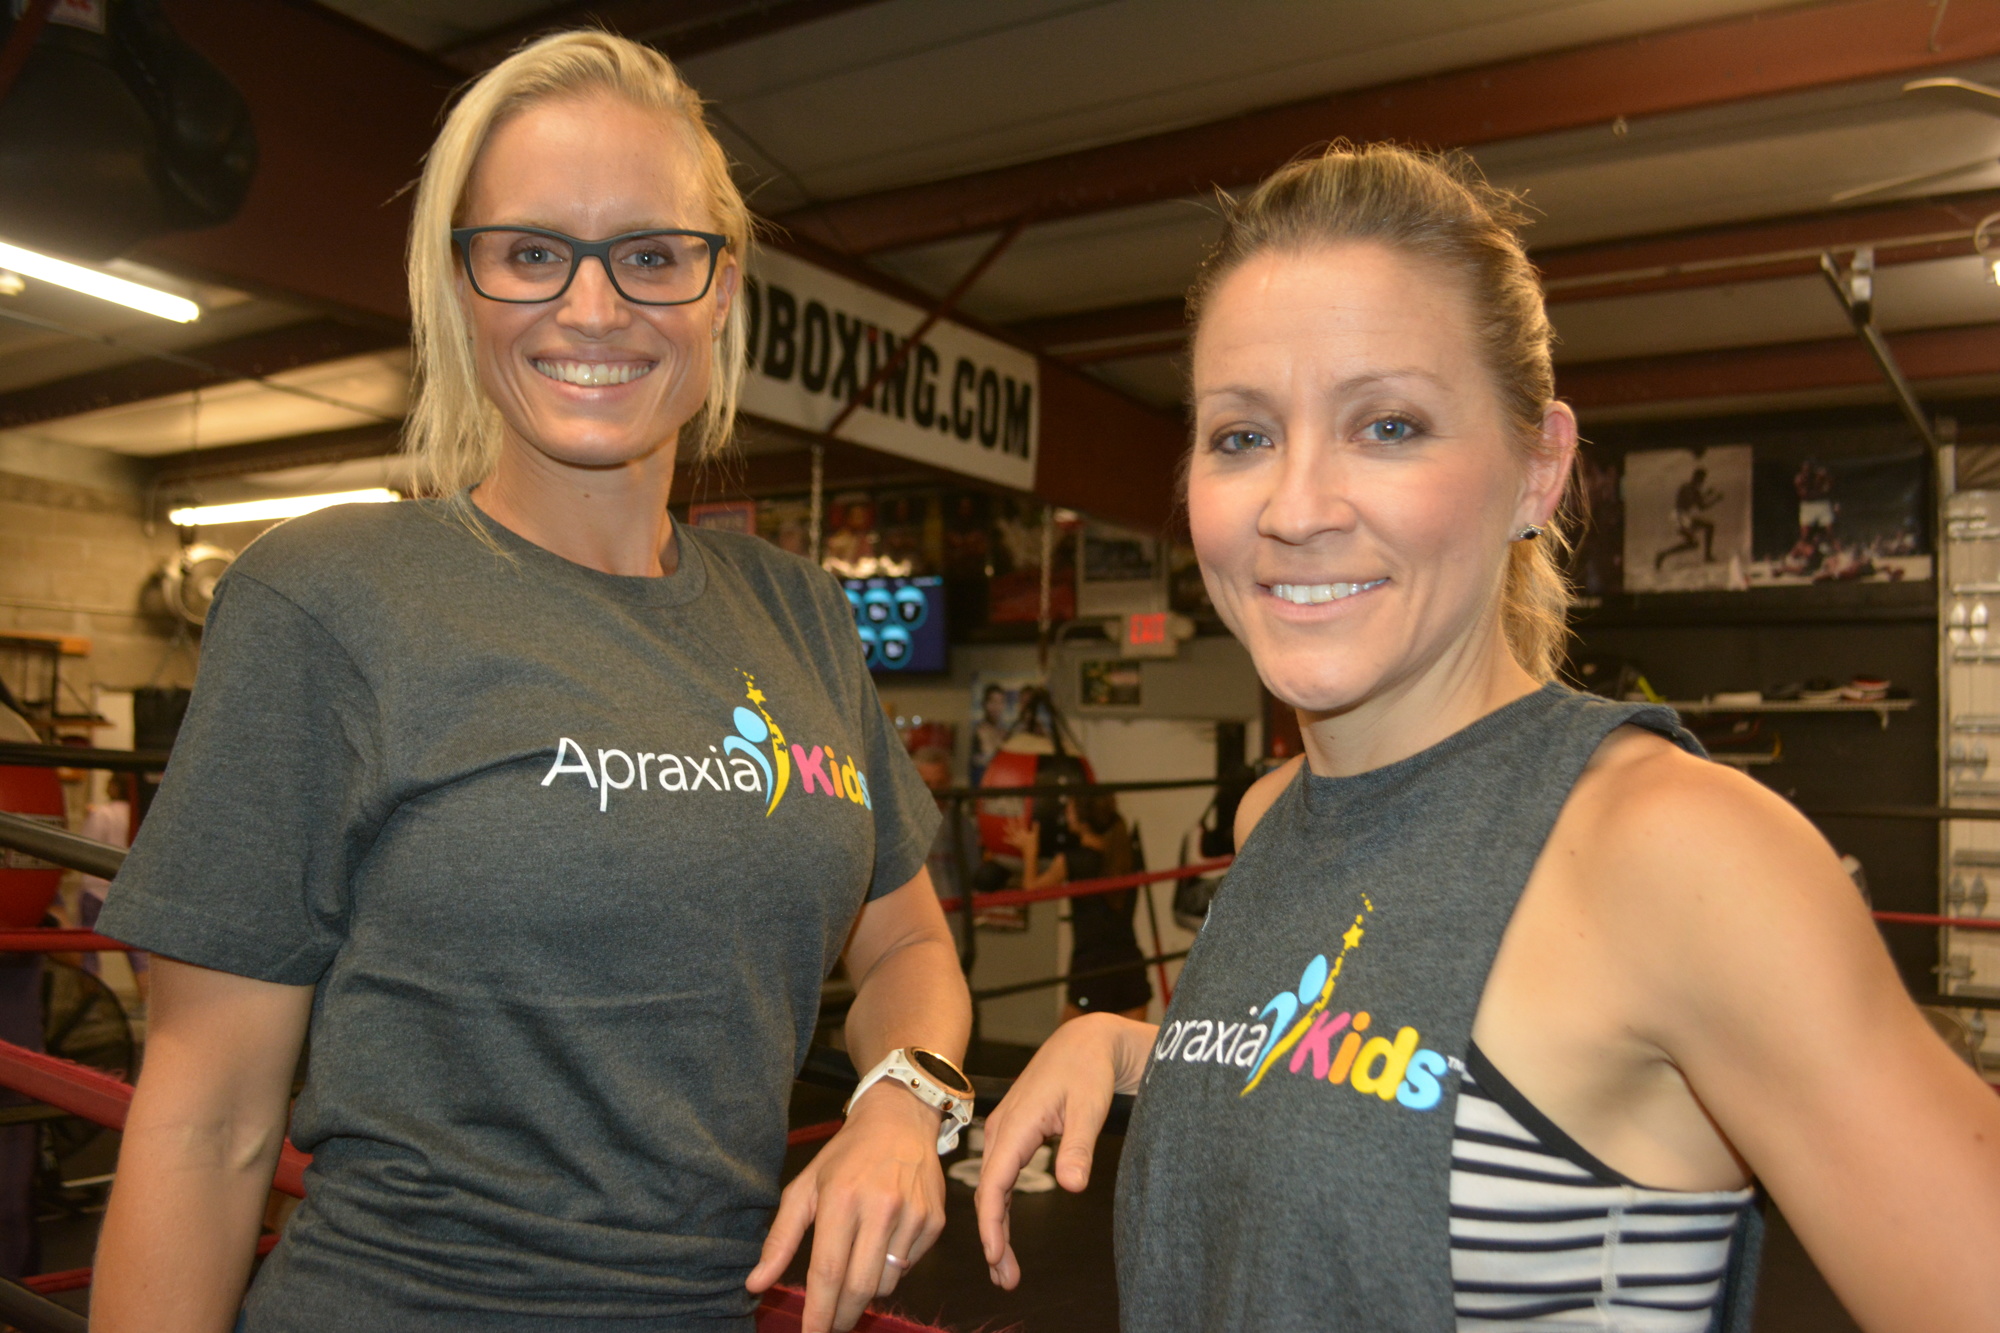 Kelli Jaco and Amy Tanaka started the Half Dozen Donut Run to raise awareness of apraxia.